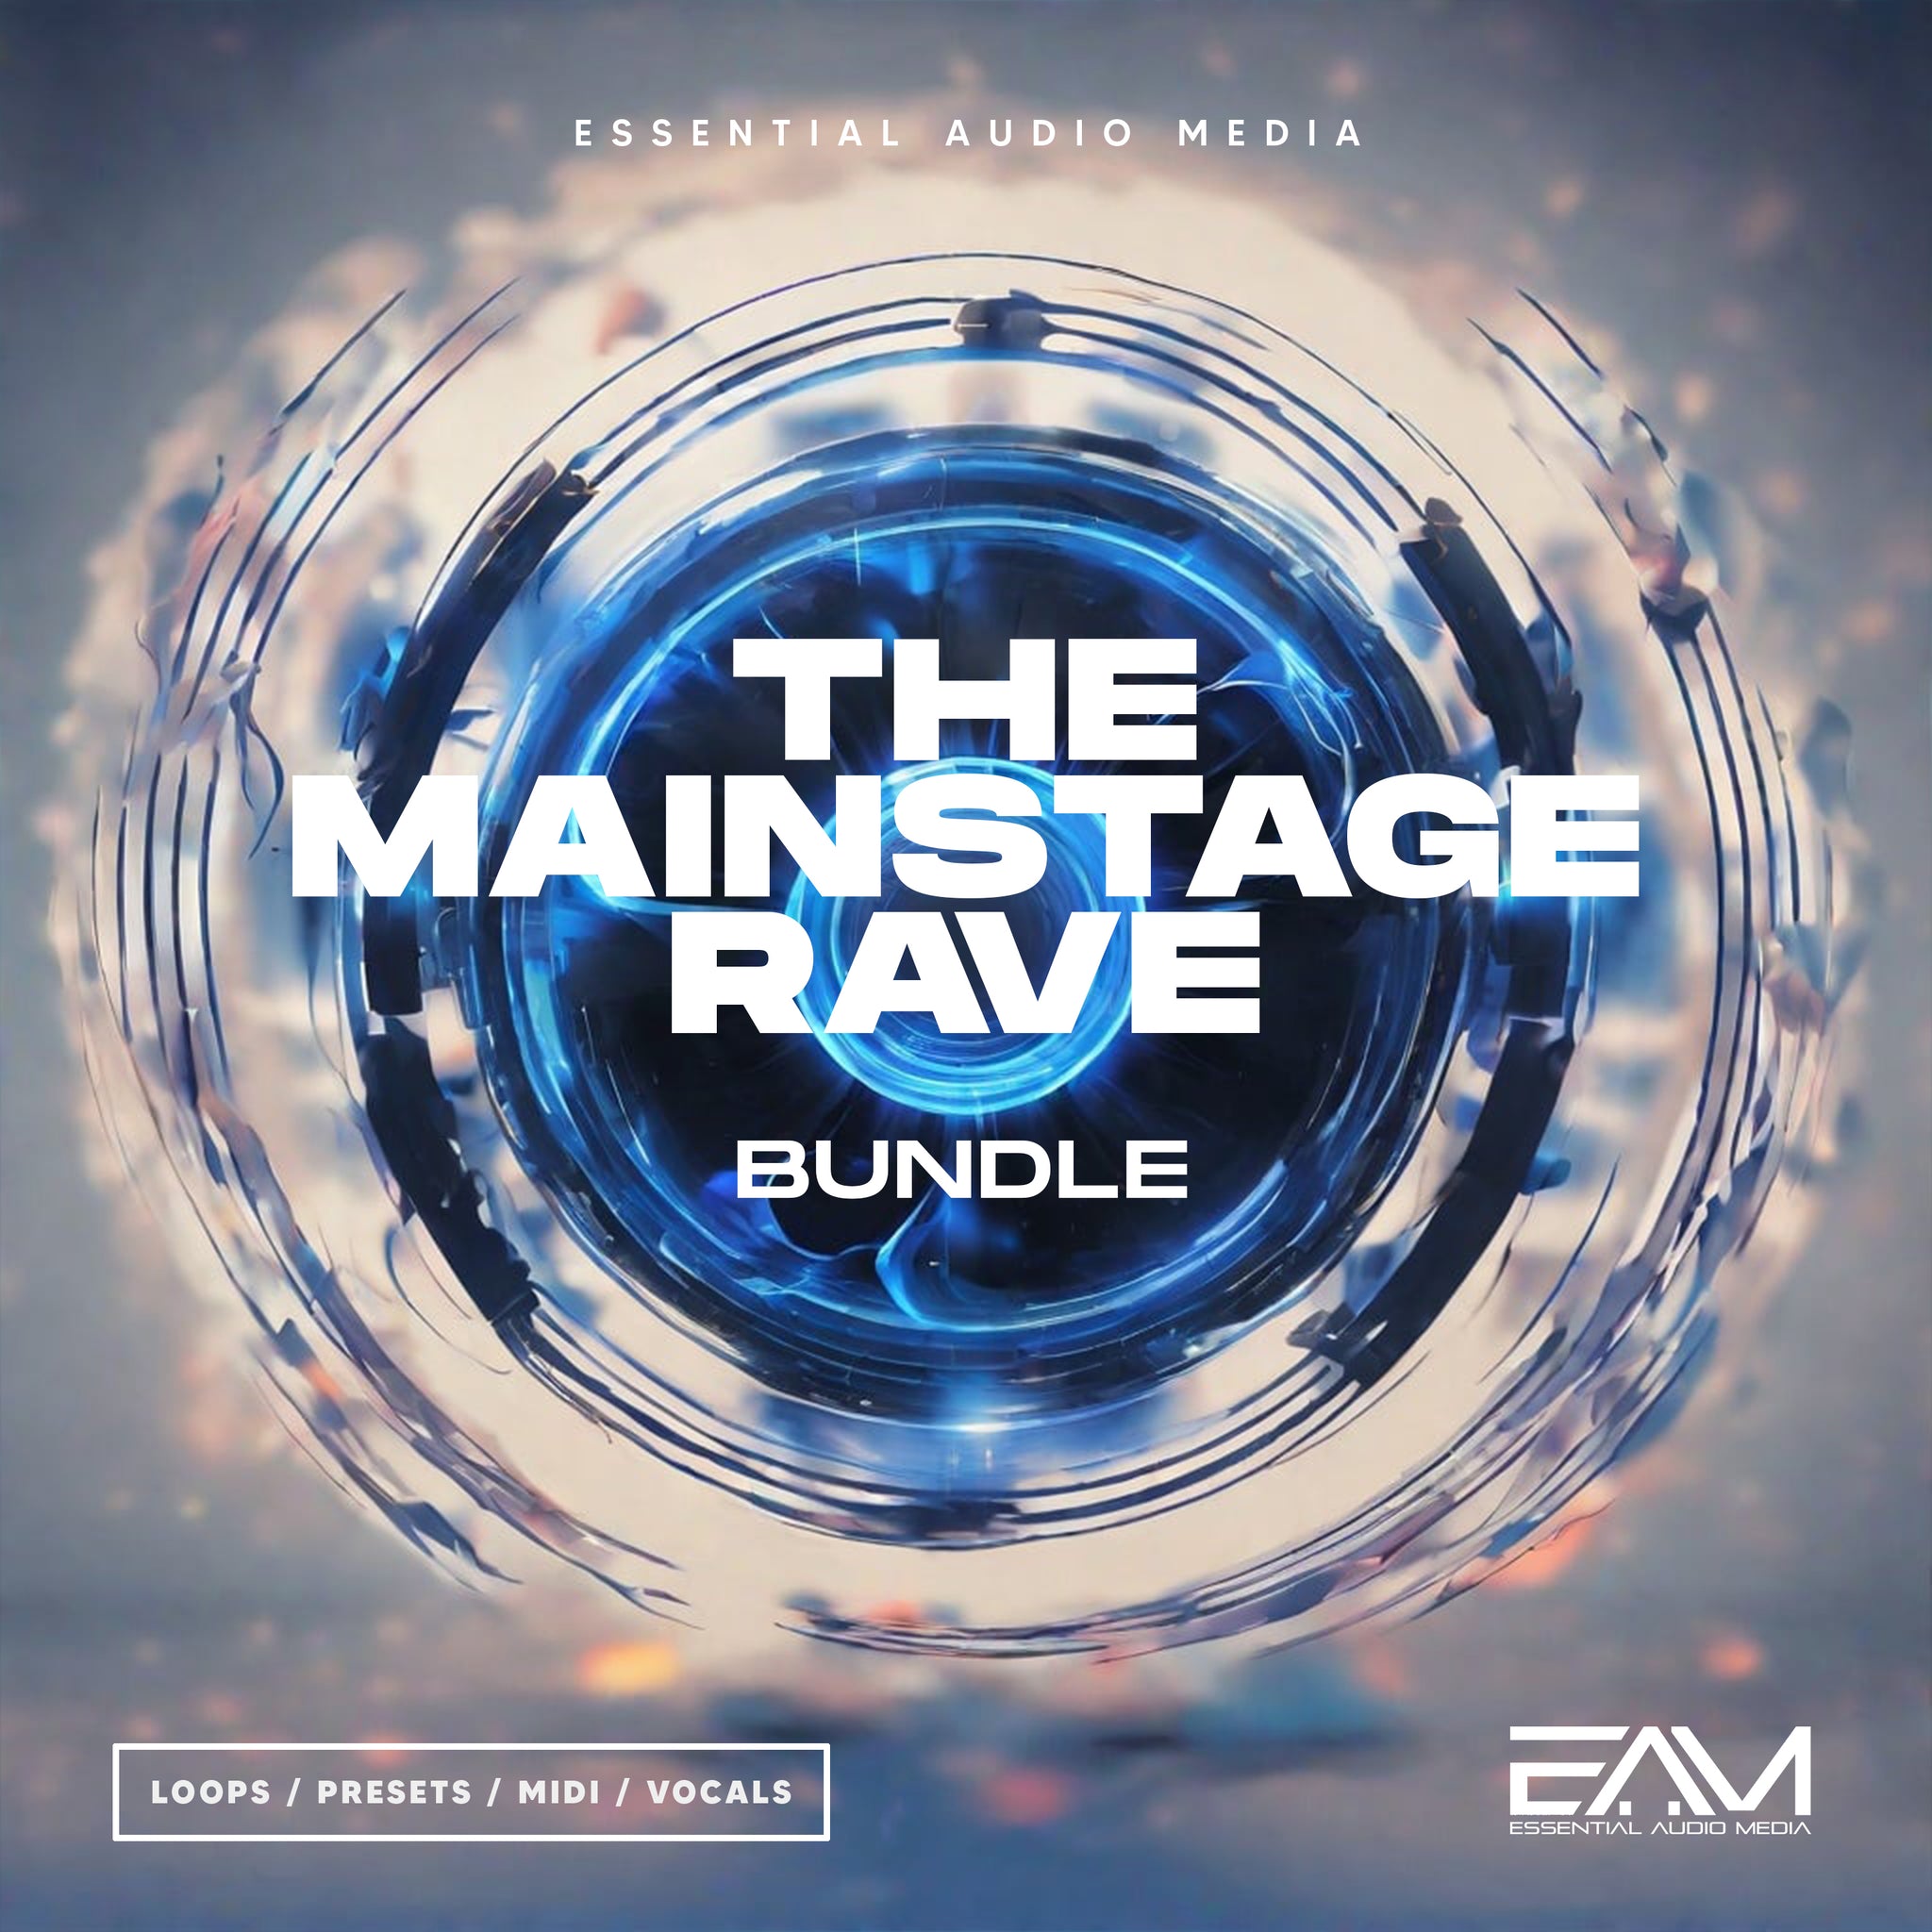 The Mainstage Rave Bundle